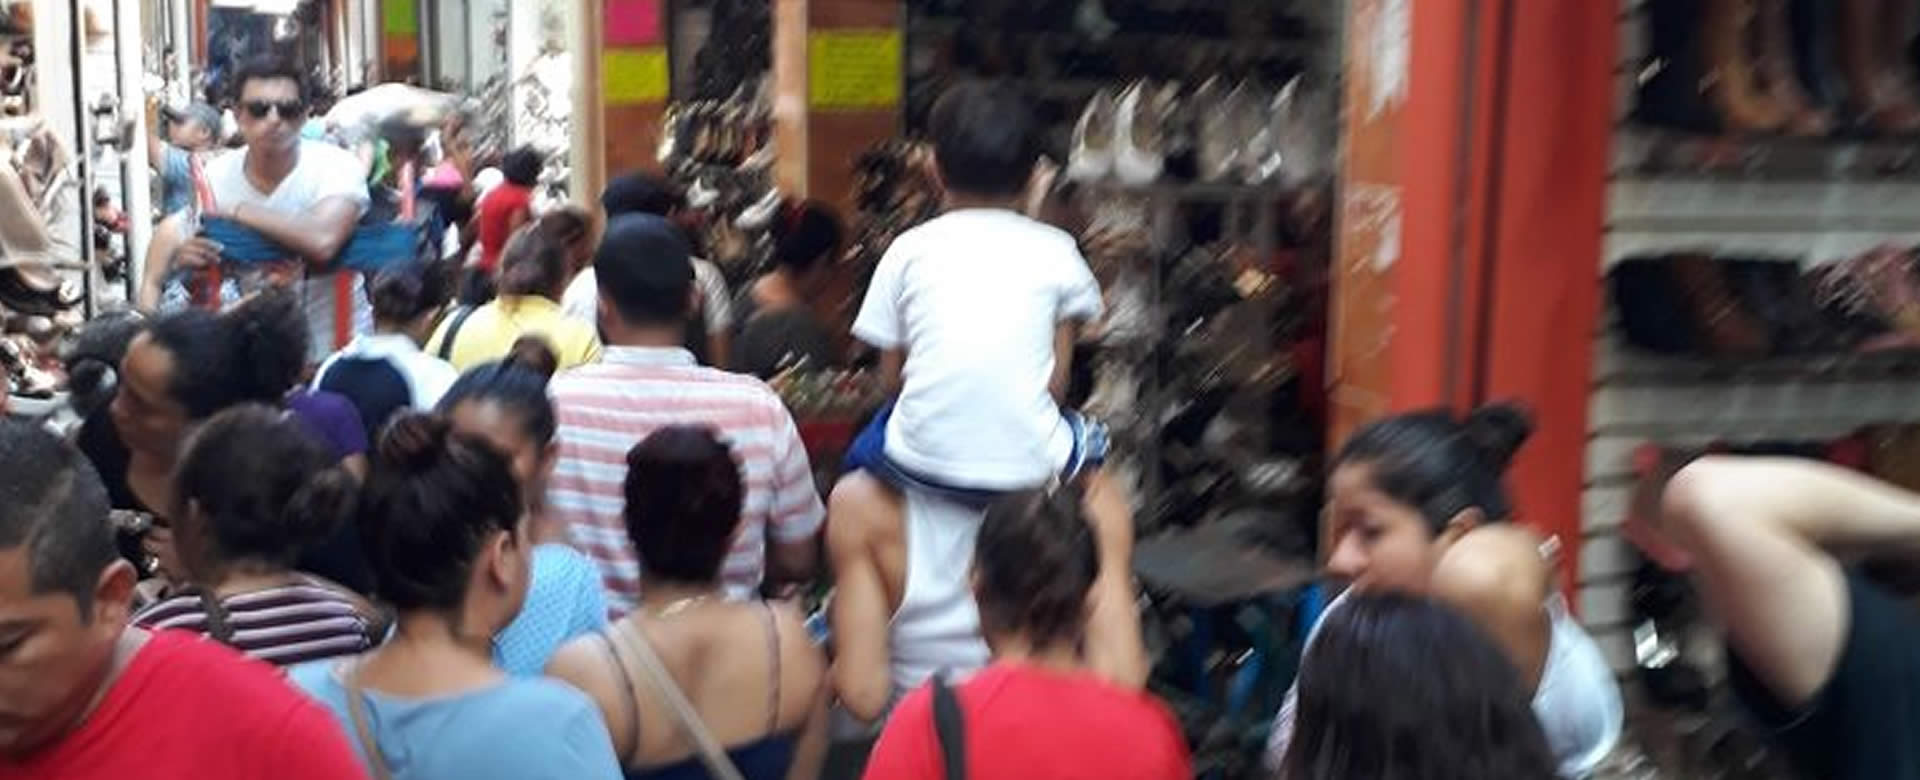 Nicaragüenses visitan Mercado Oriental con aguinaldo en mano para hacer compras navideñas